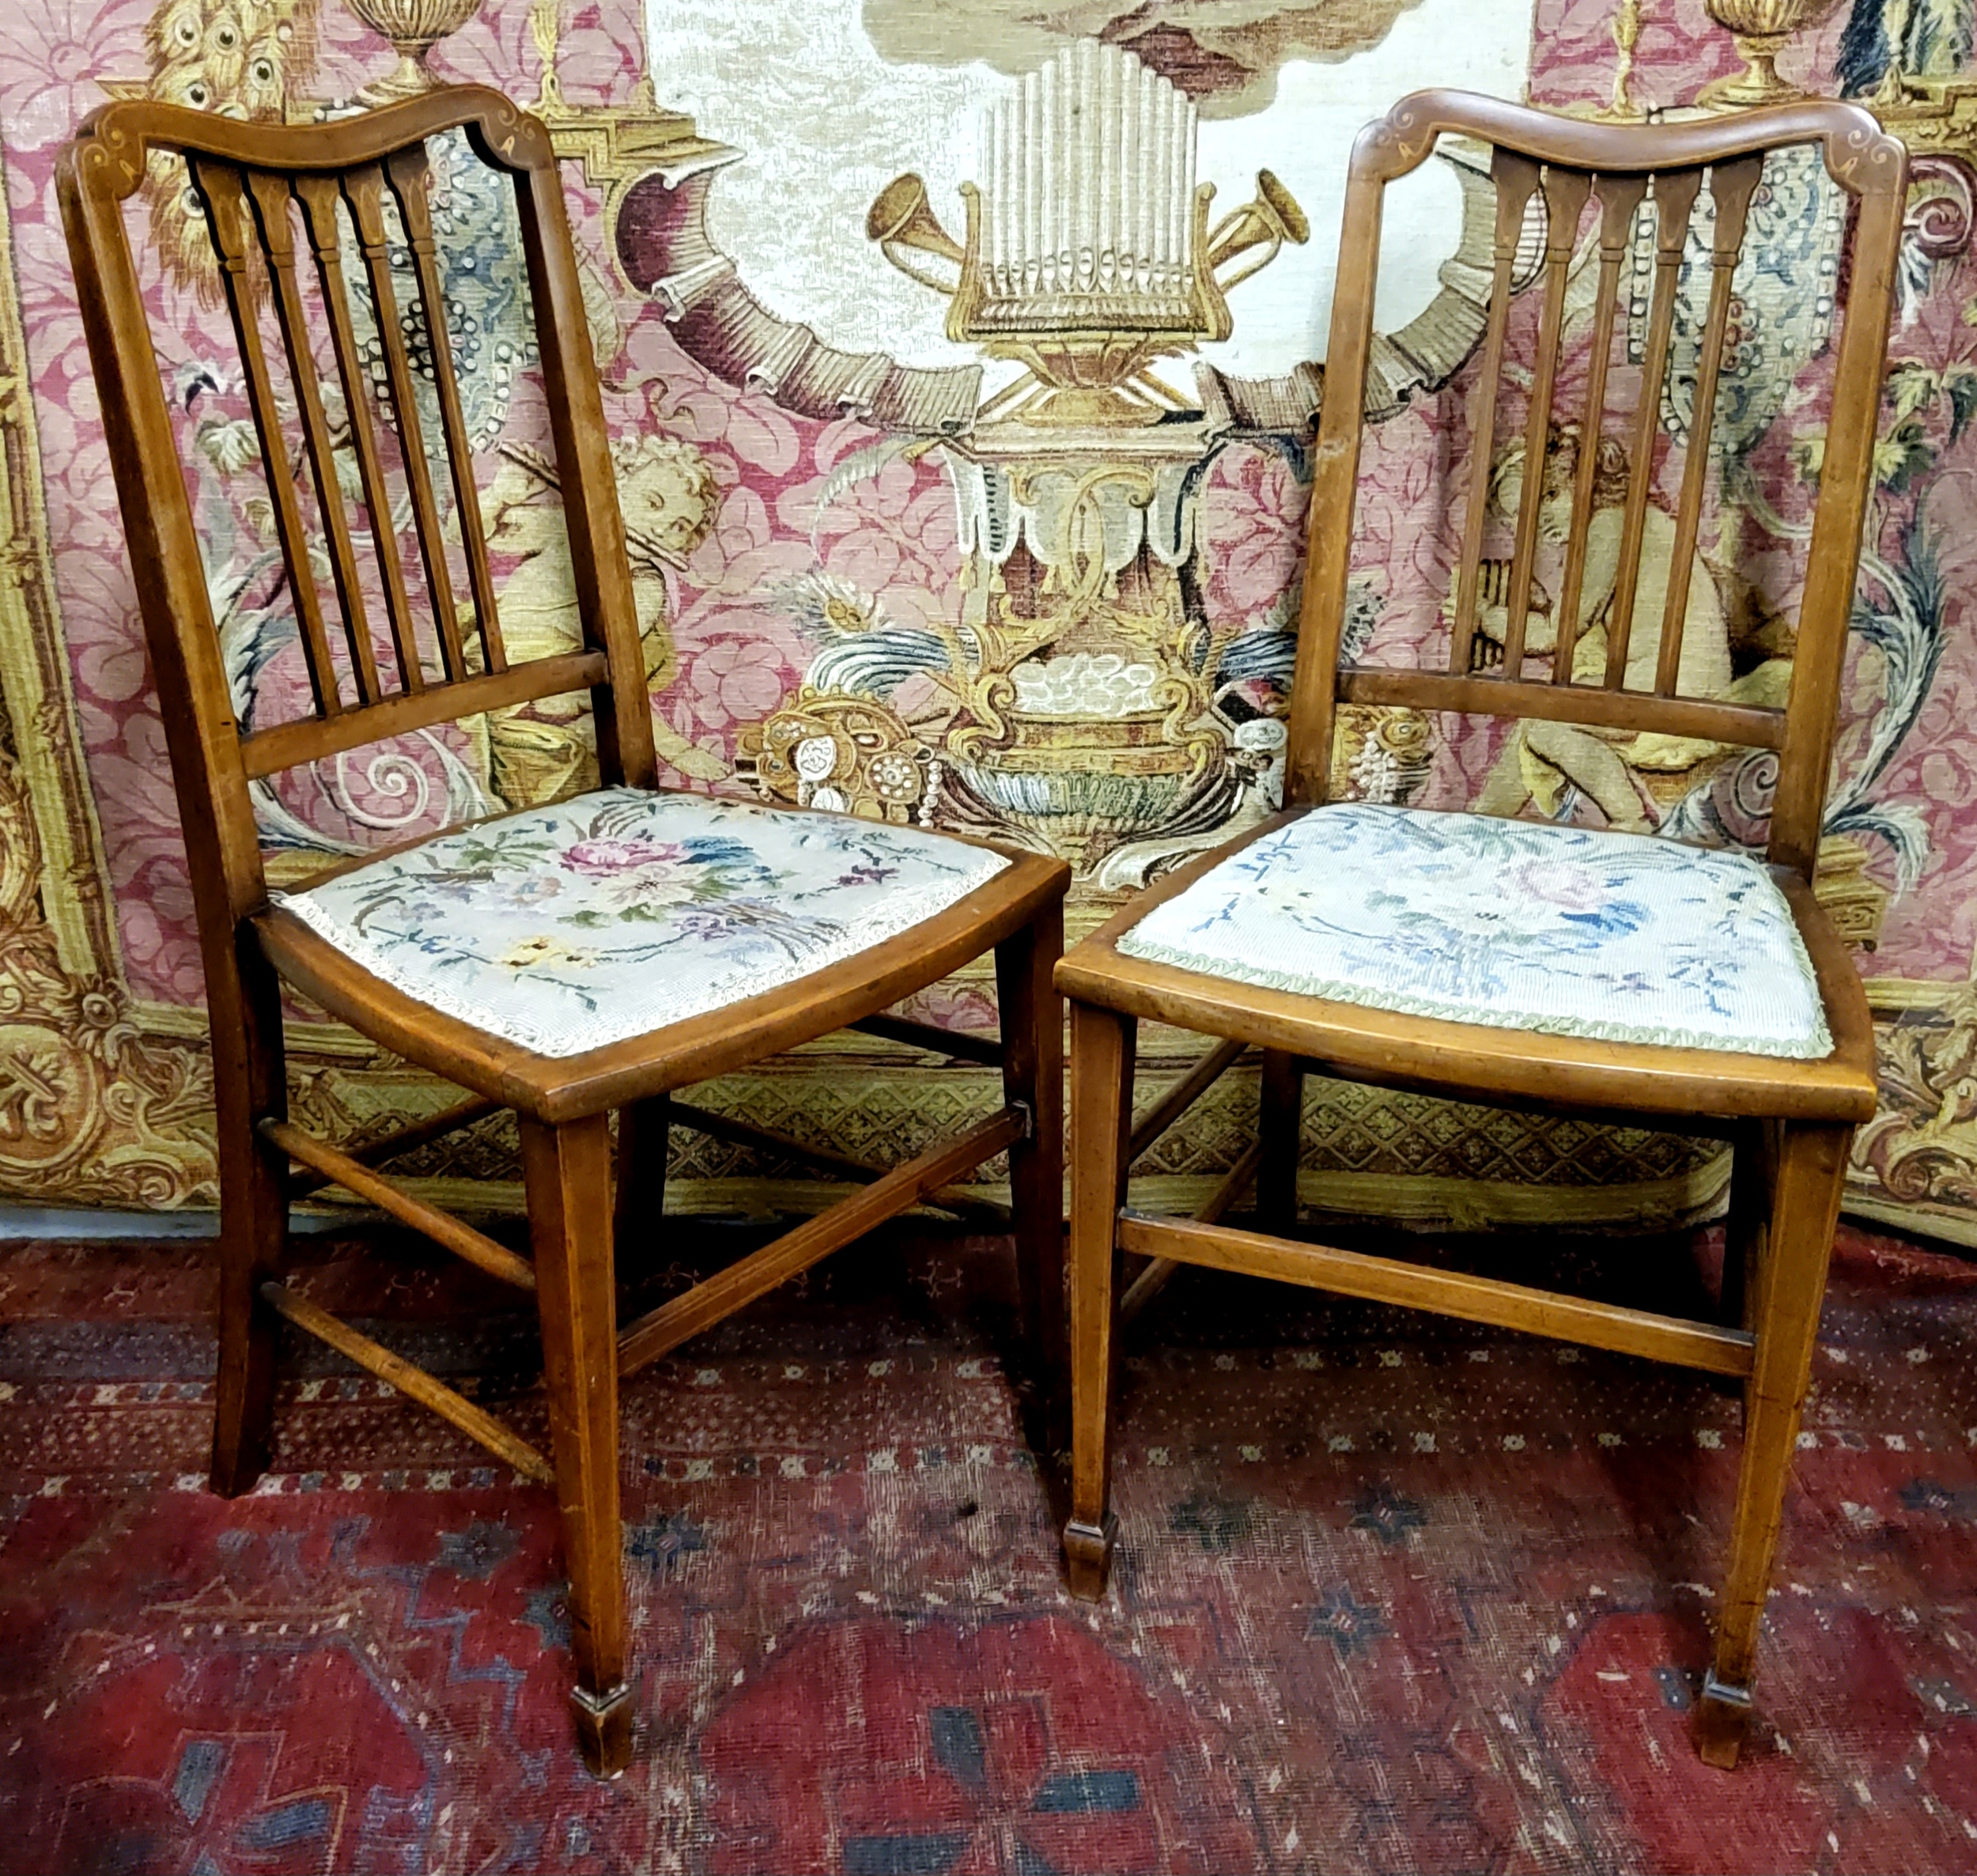 An elegant pair of Edwardian Sheraton Revival bedroom chairs c.1905